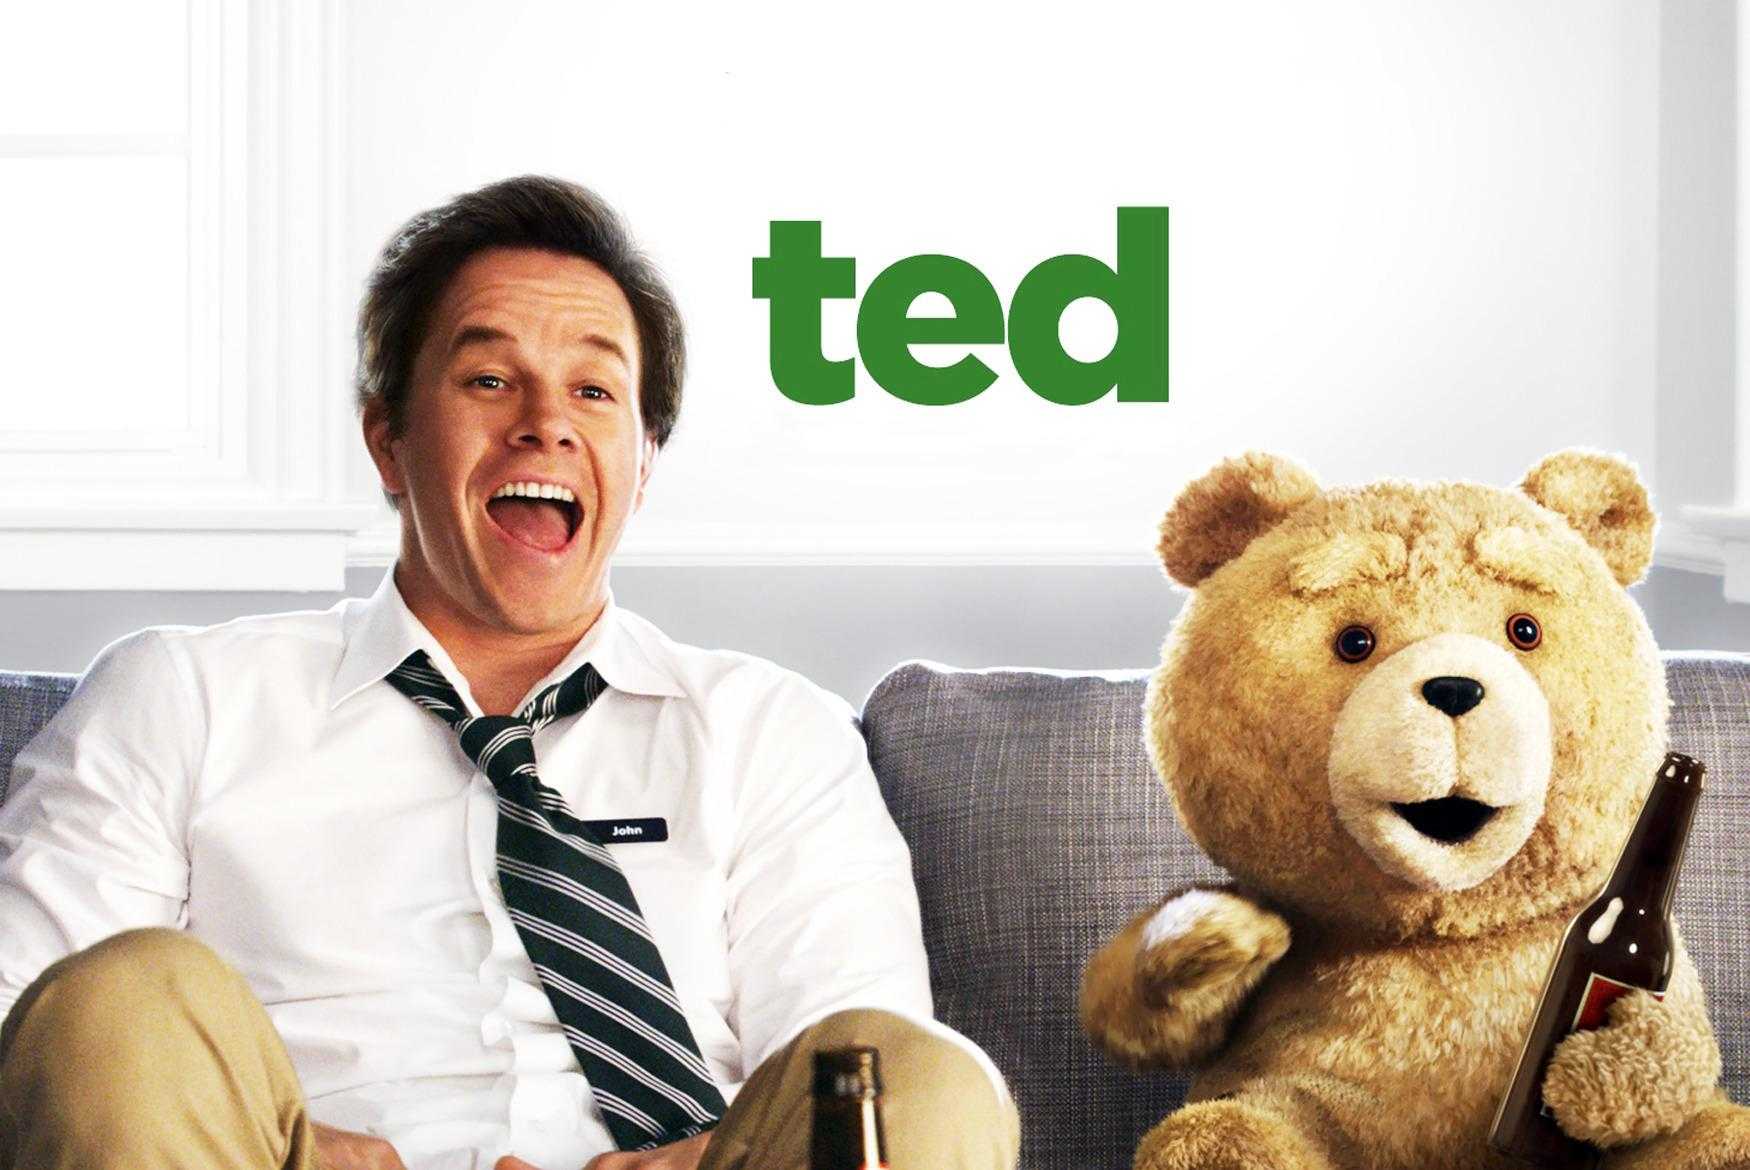 SPECIALE OSCAR 2013: Ted sul palco degli Academy Awards